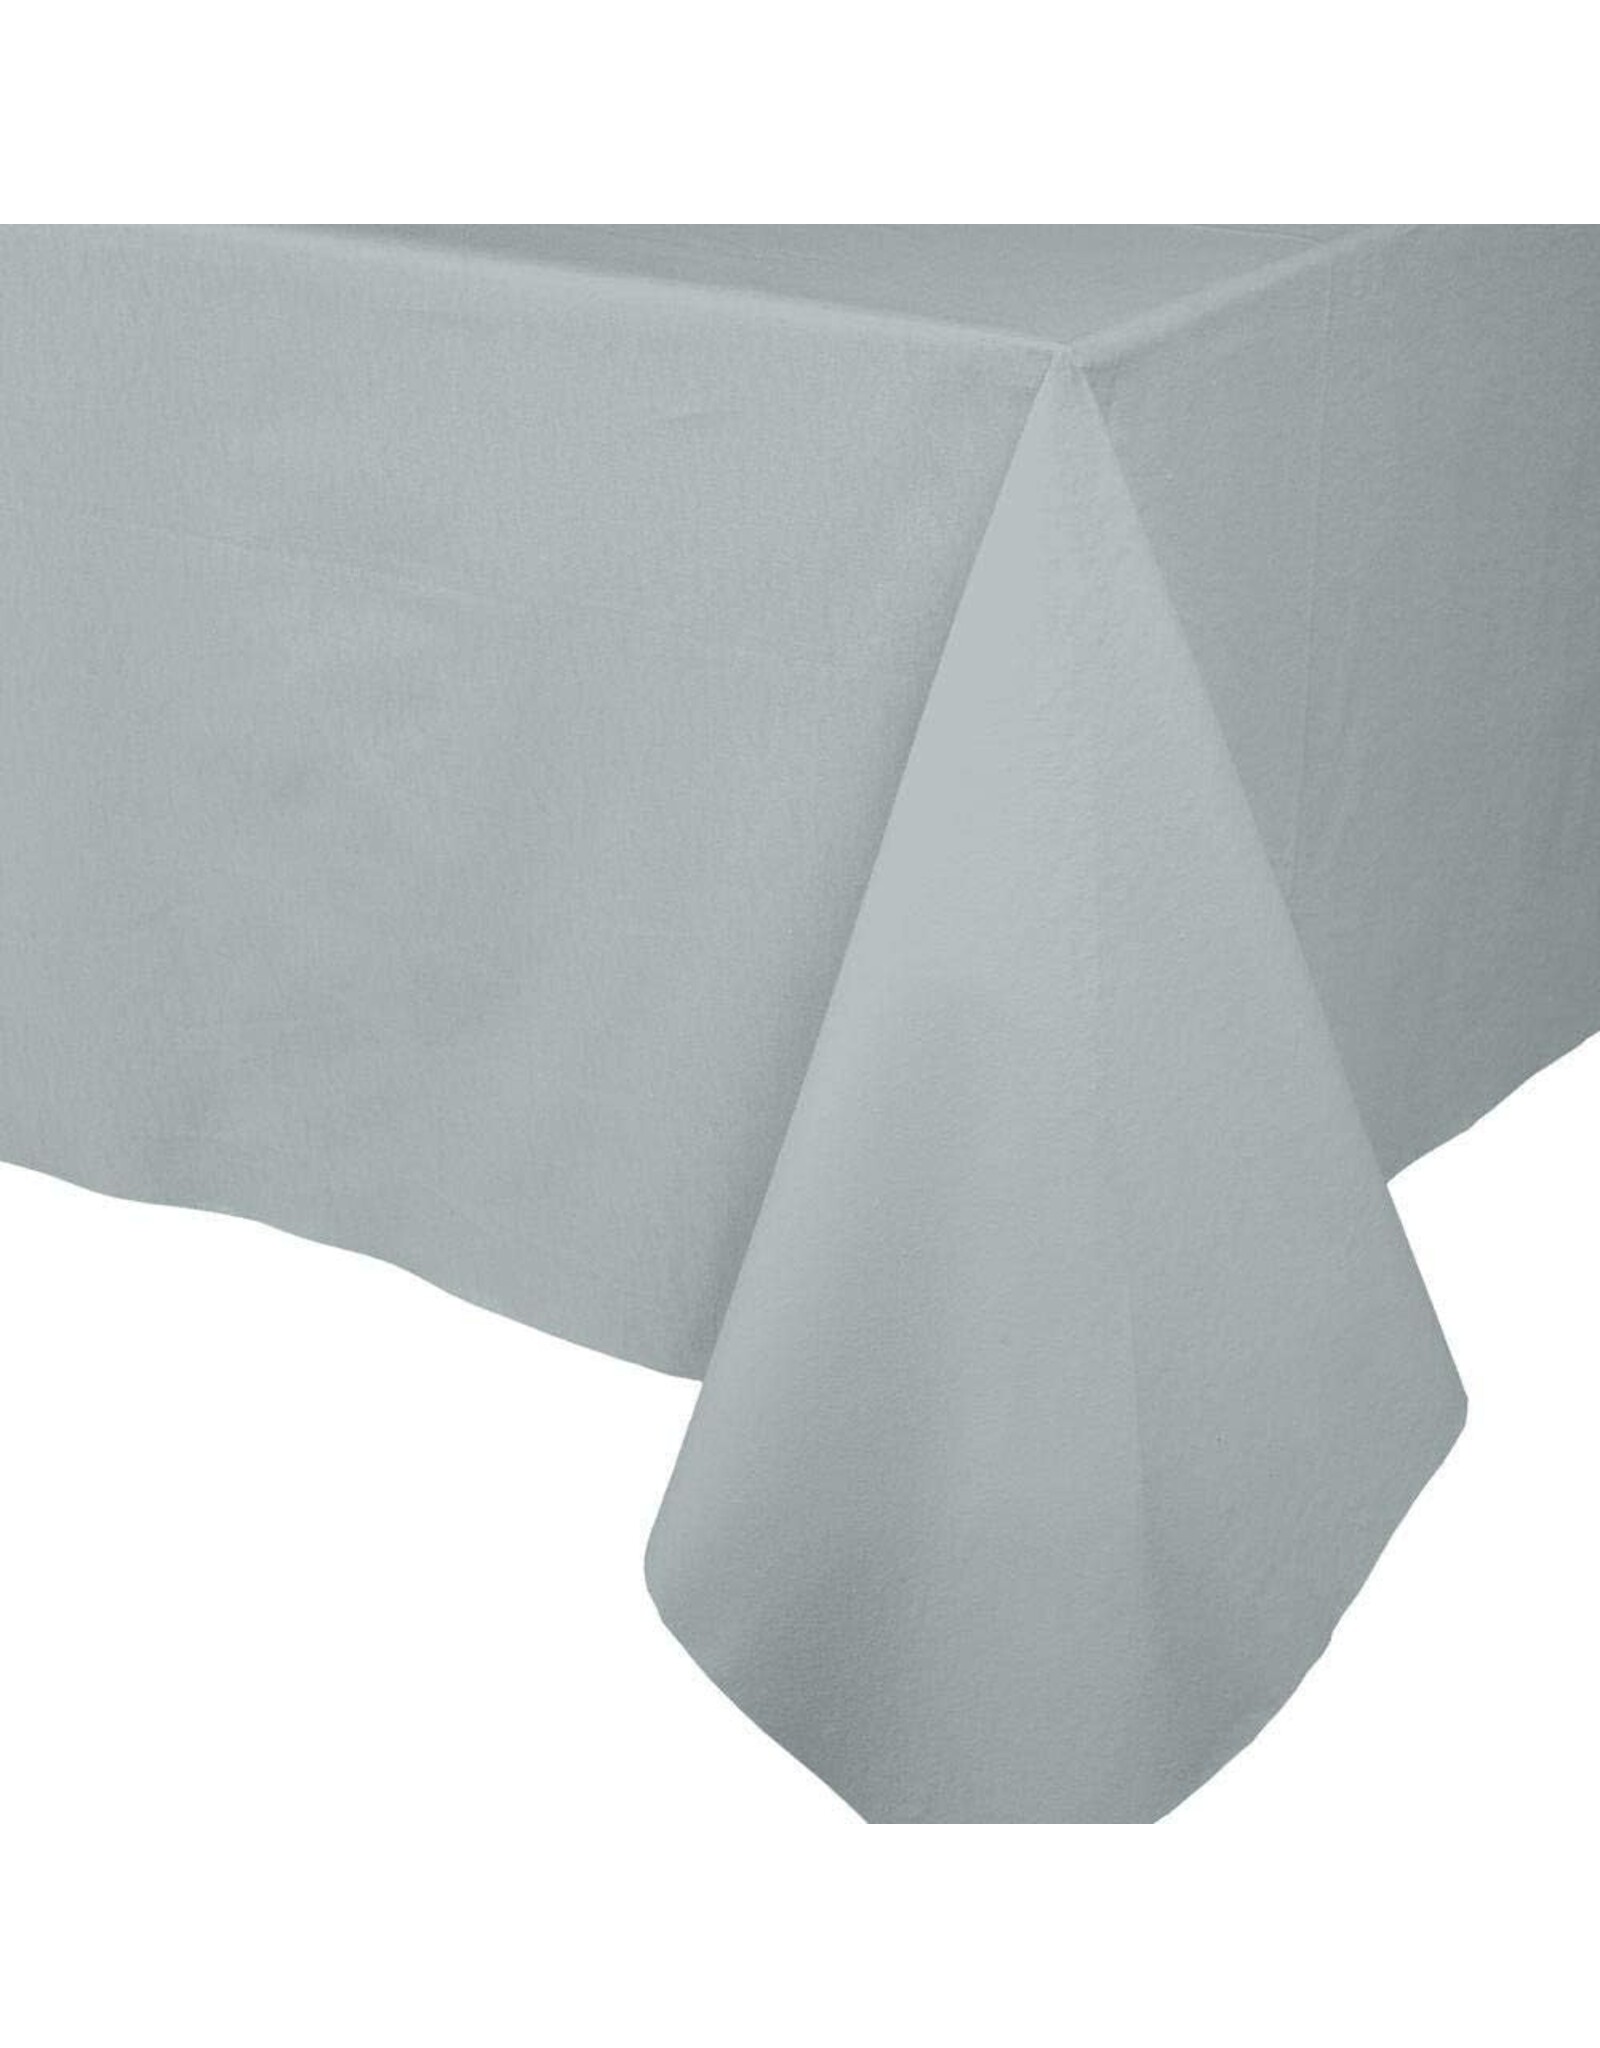 Caspari Paper Linen Solid Table Covers In Silver